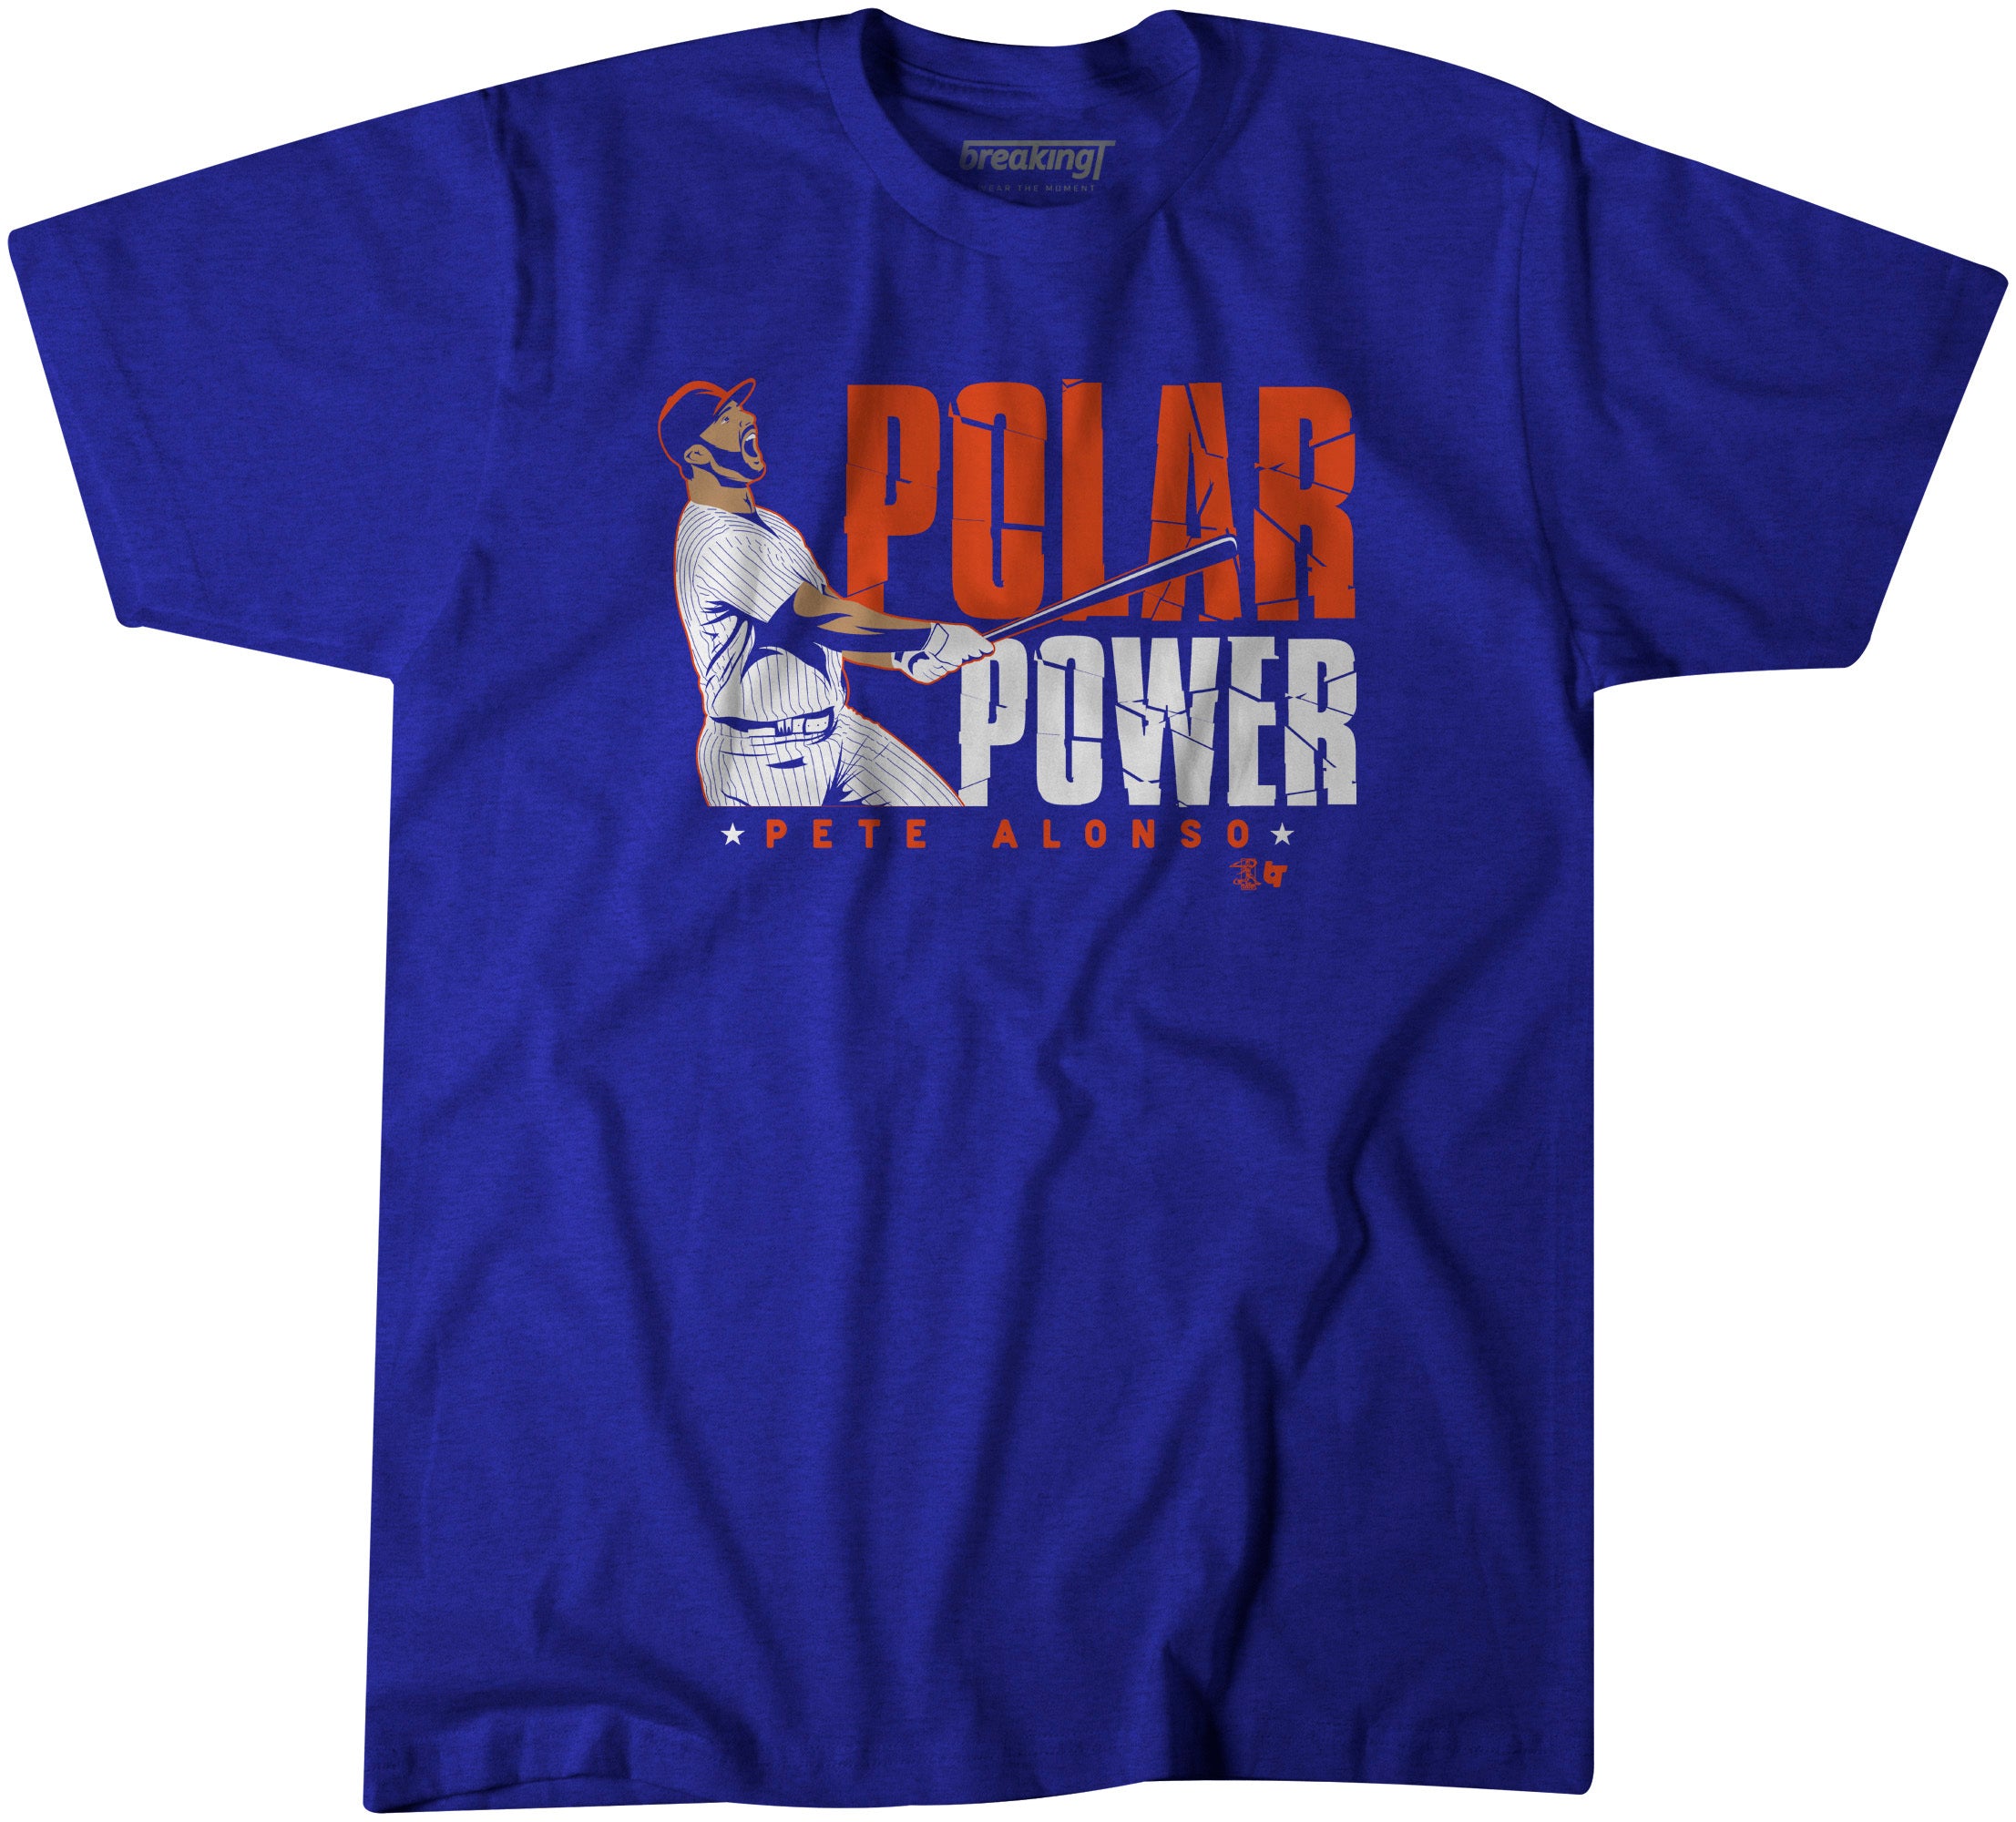 Pete Alonso Derby Shirt, Polar Power - BreakingT